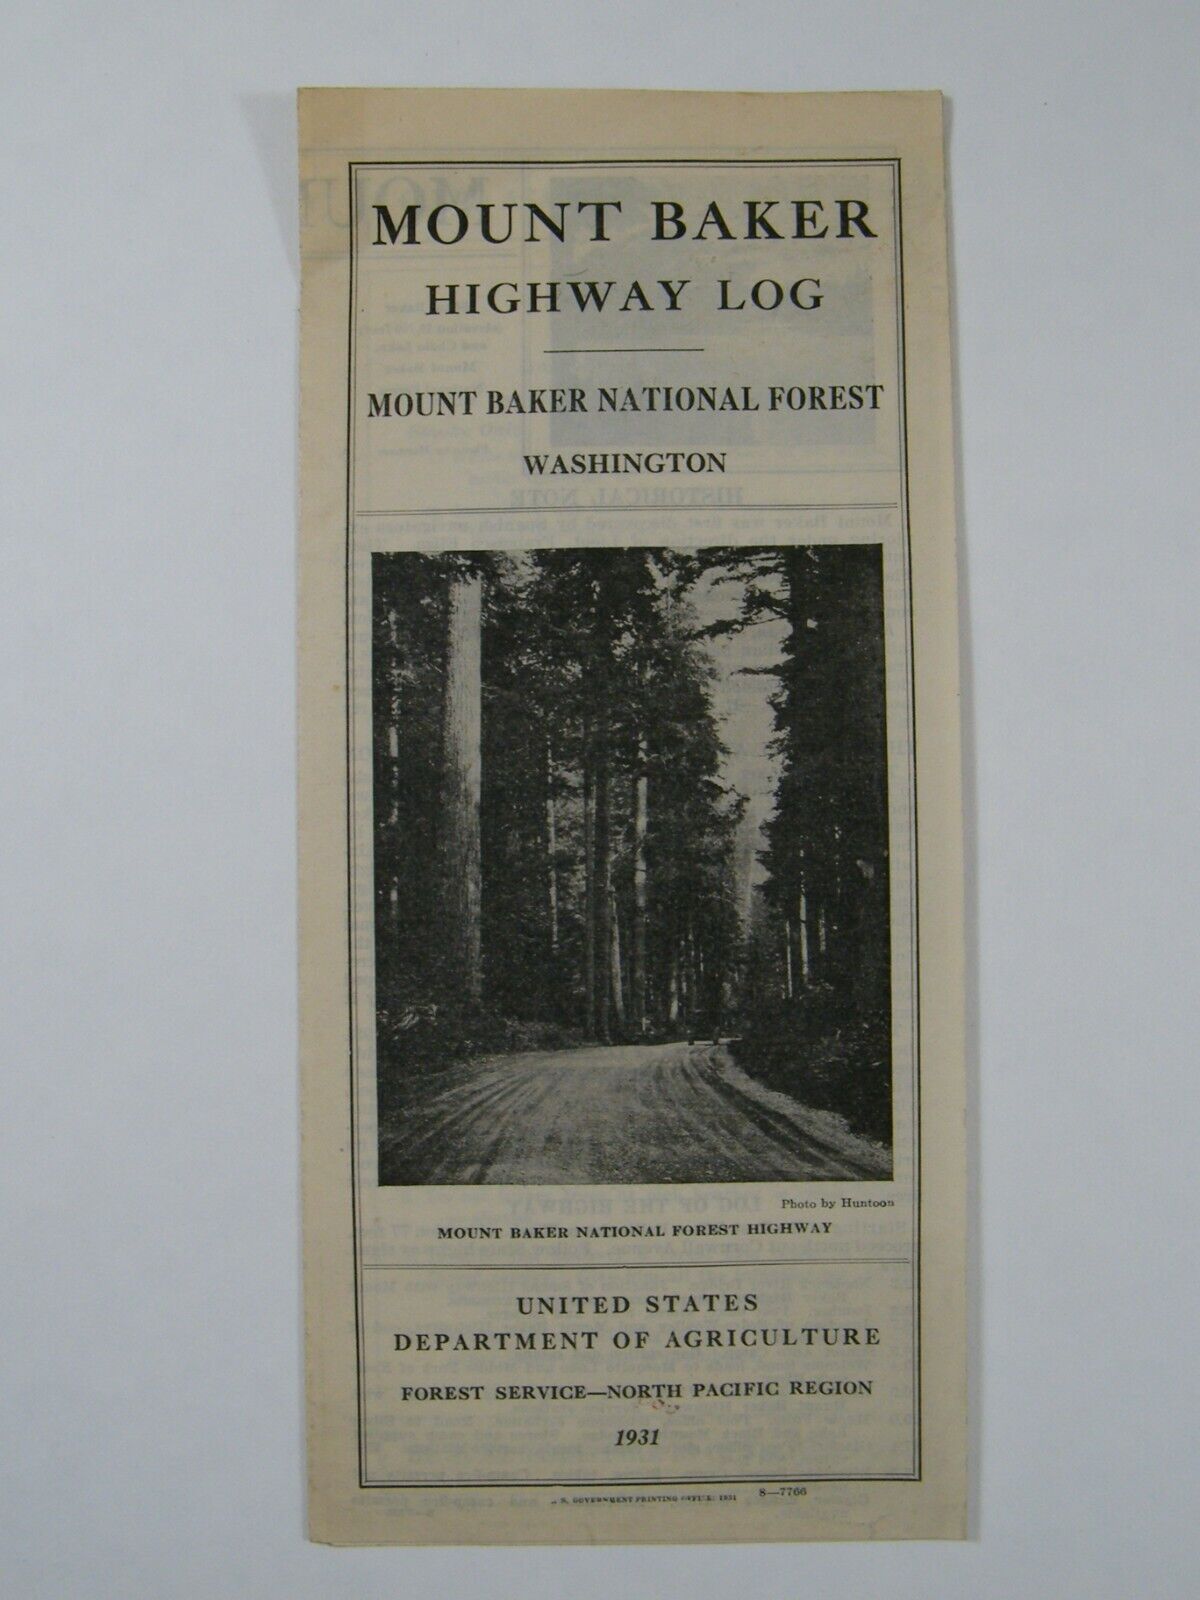 1931 MOUNT BAKER HIGHWAY LOG US DEPARTMENT OF AGRICULTURE